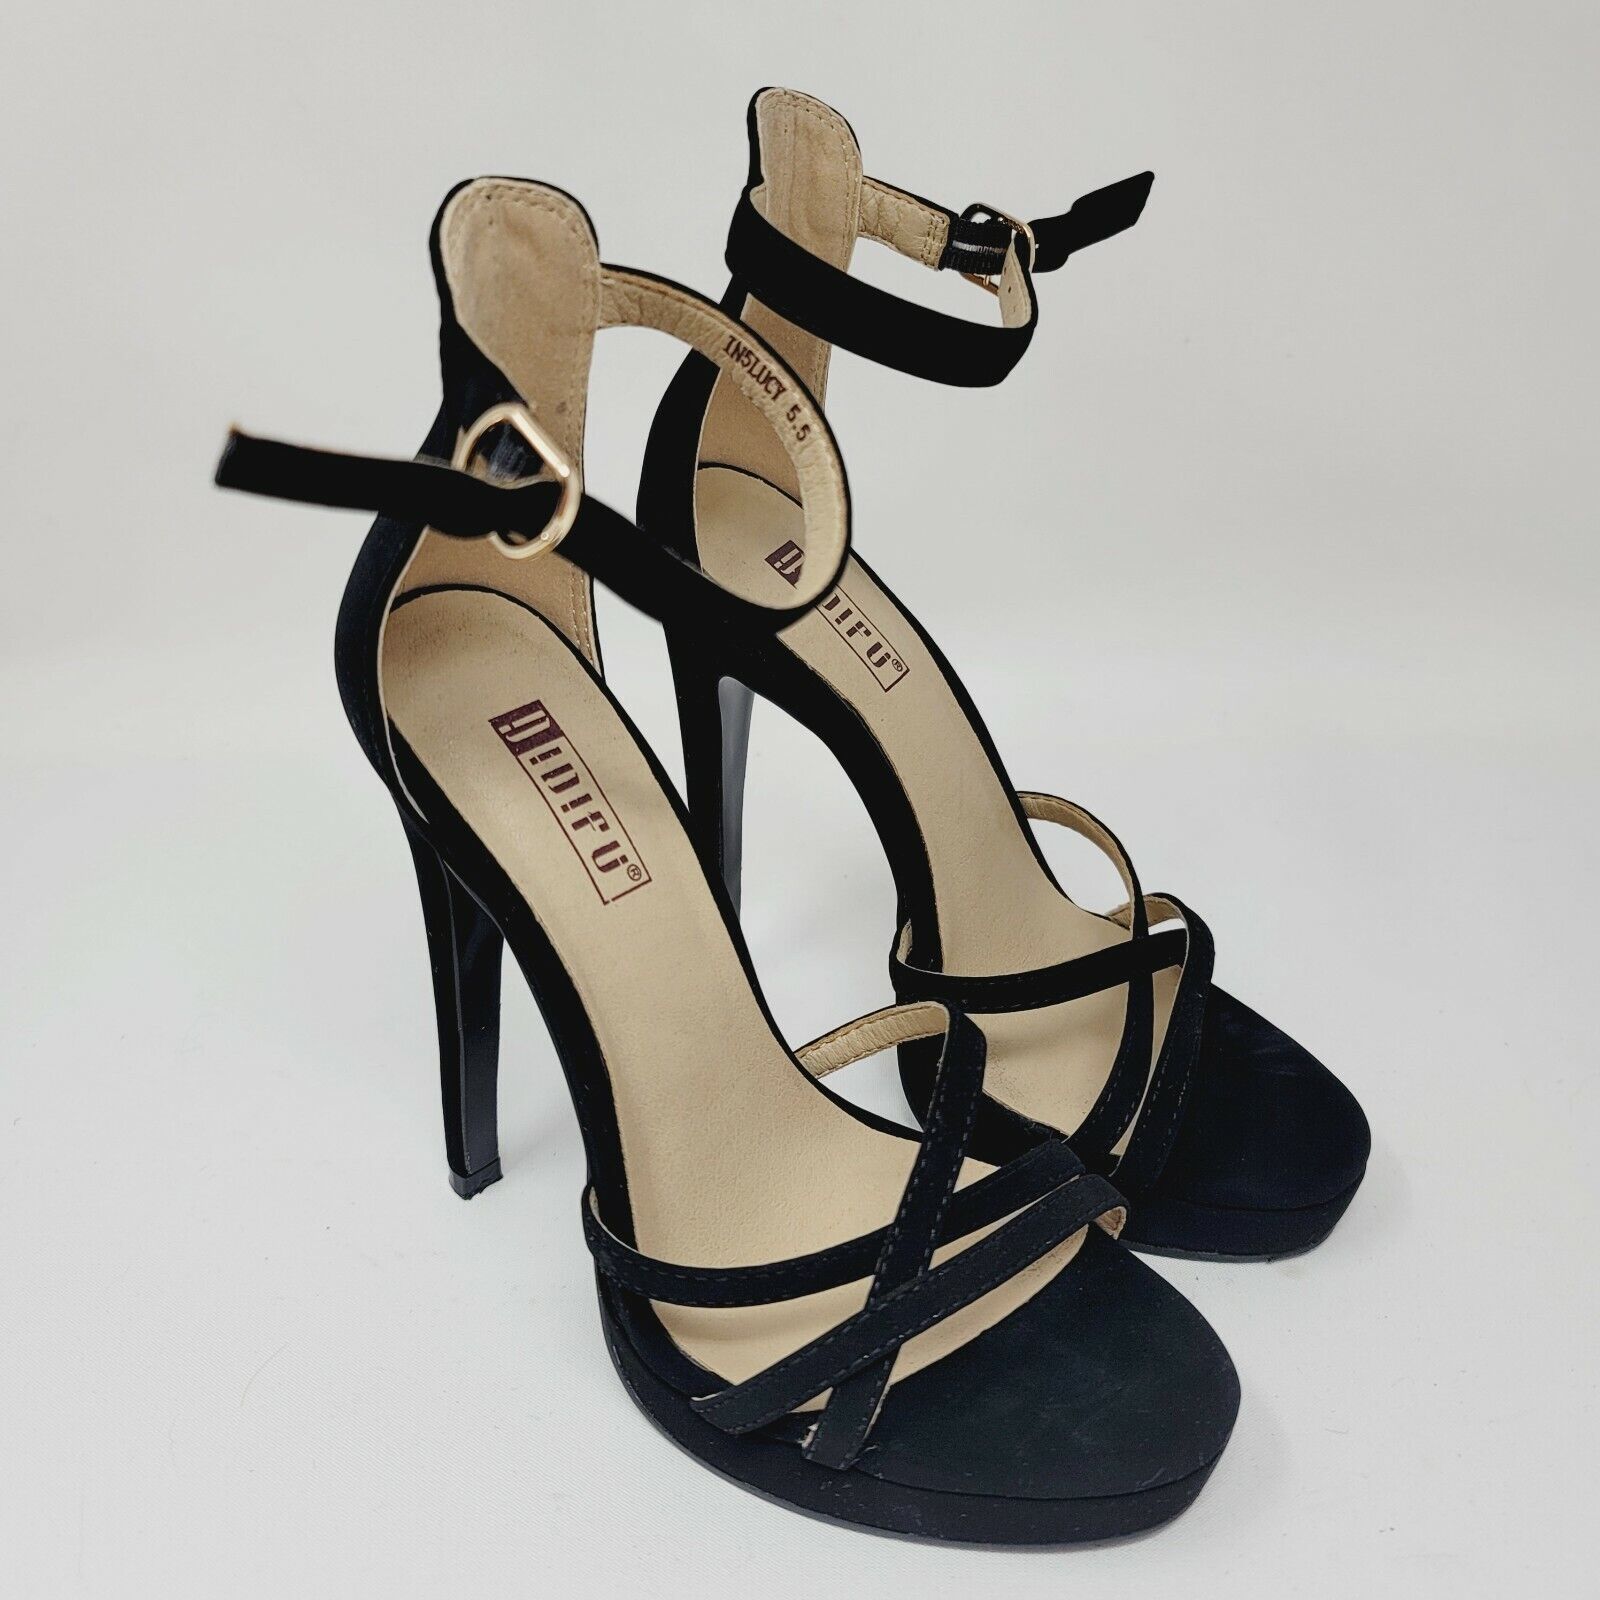 IDIFU Women's IN5 Lucy Strappy Black Platform Heels Open Toe Shoes Size 5.5 M